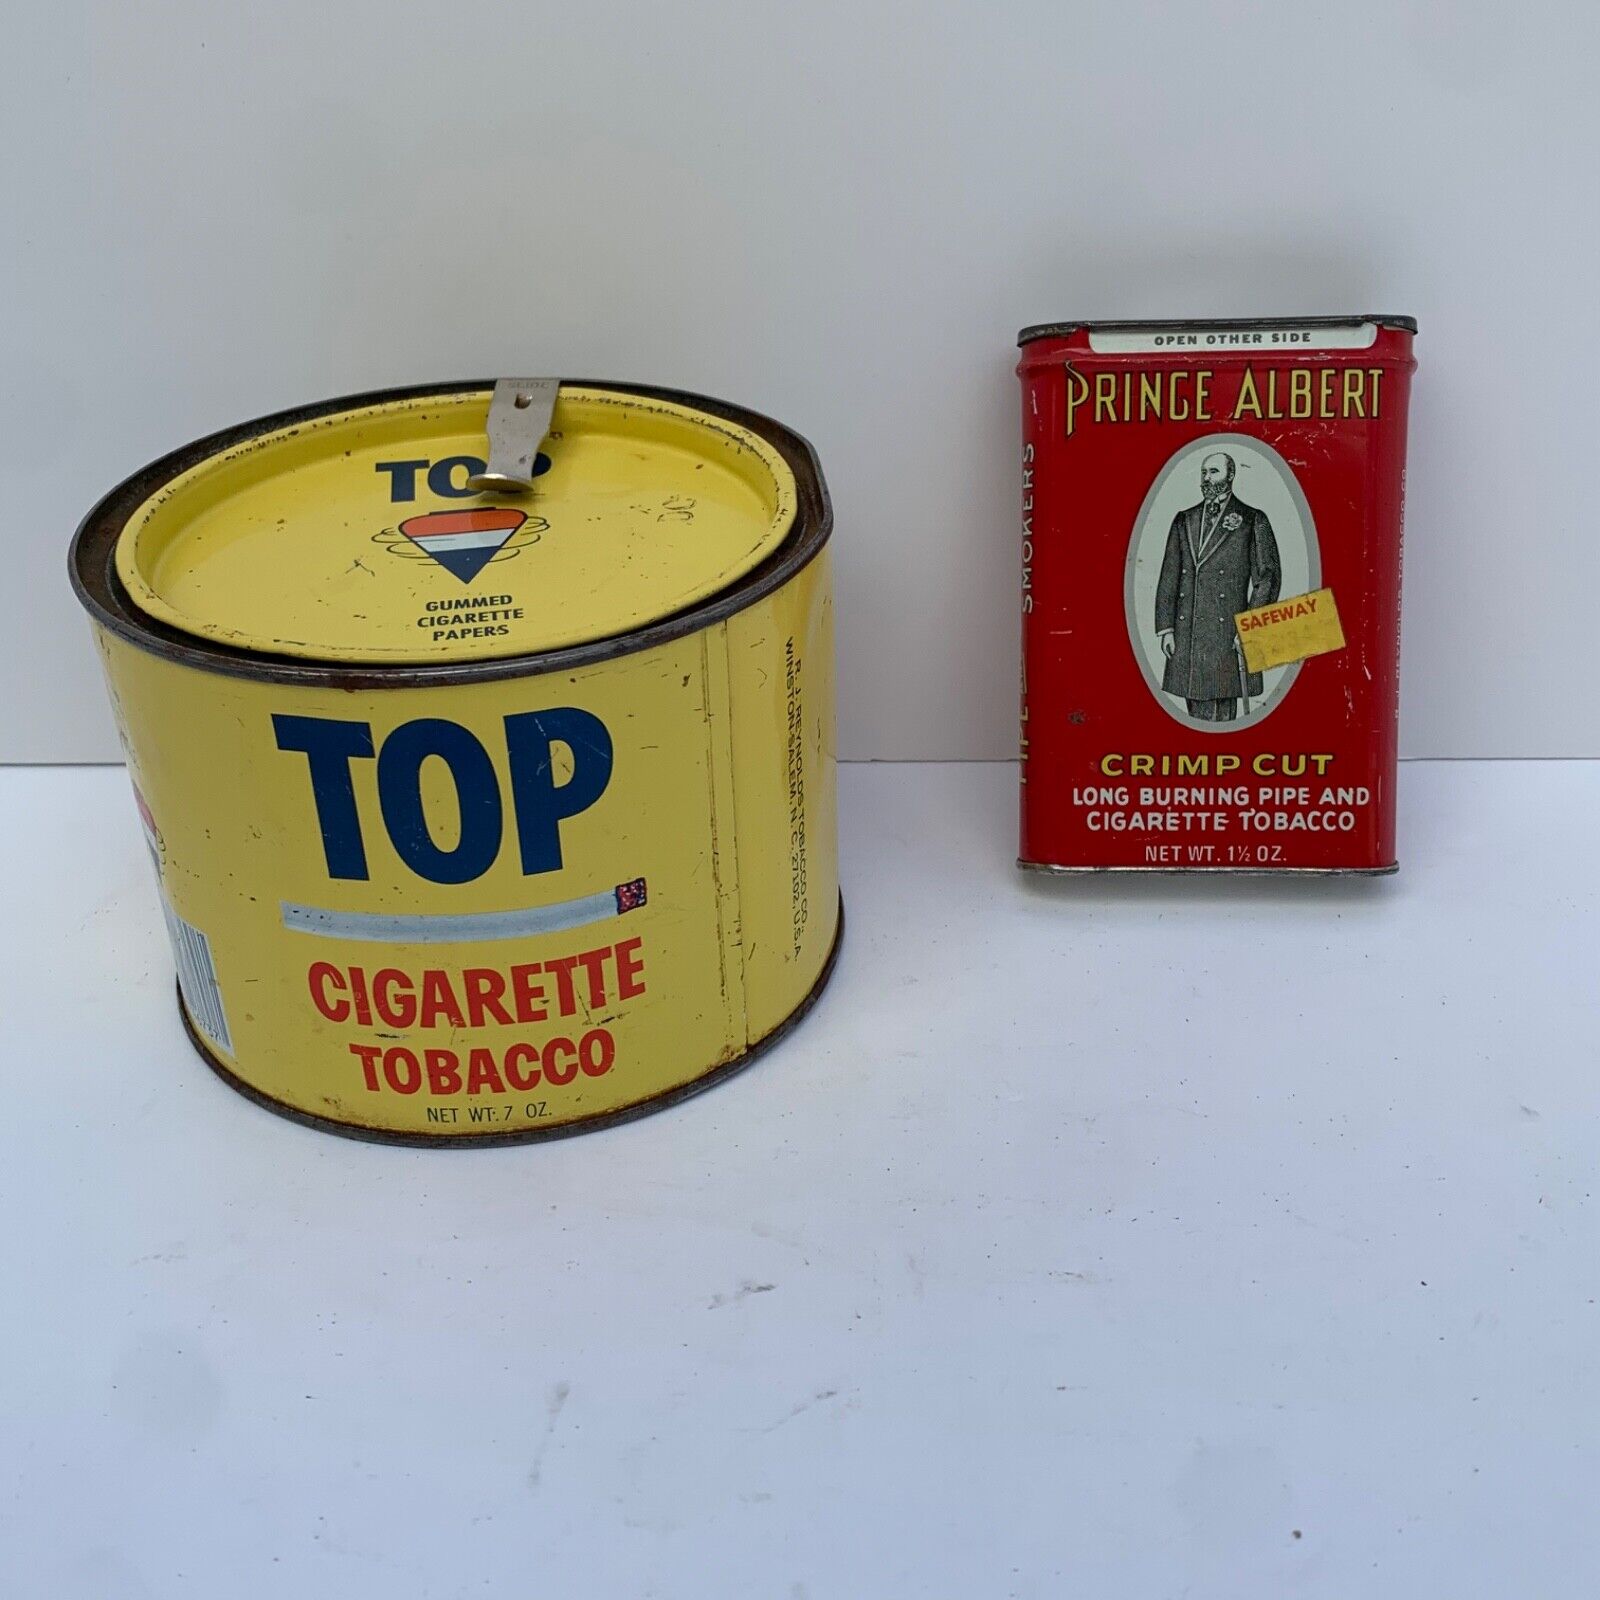 Vintage Top Cigarette Tobacco & Prince Albert Tin Cans R.J. Reynolds Tobacco Co.